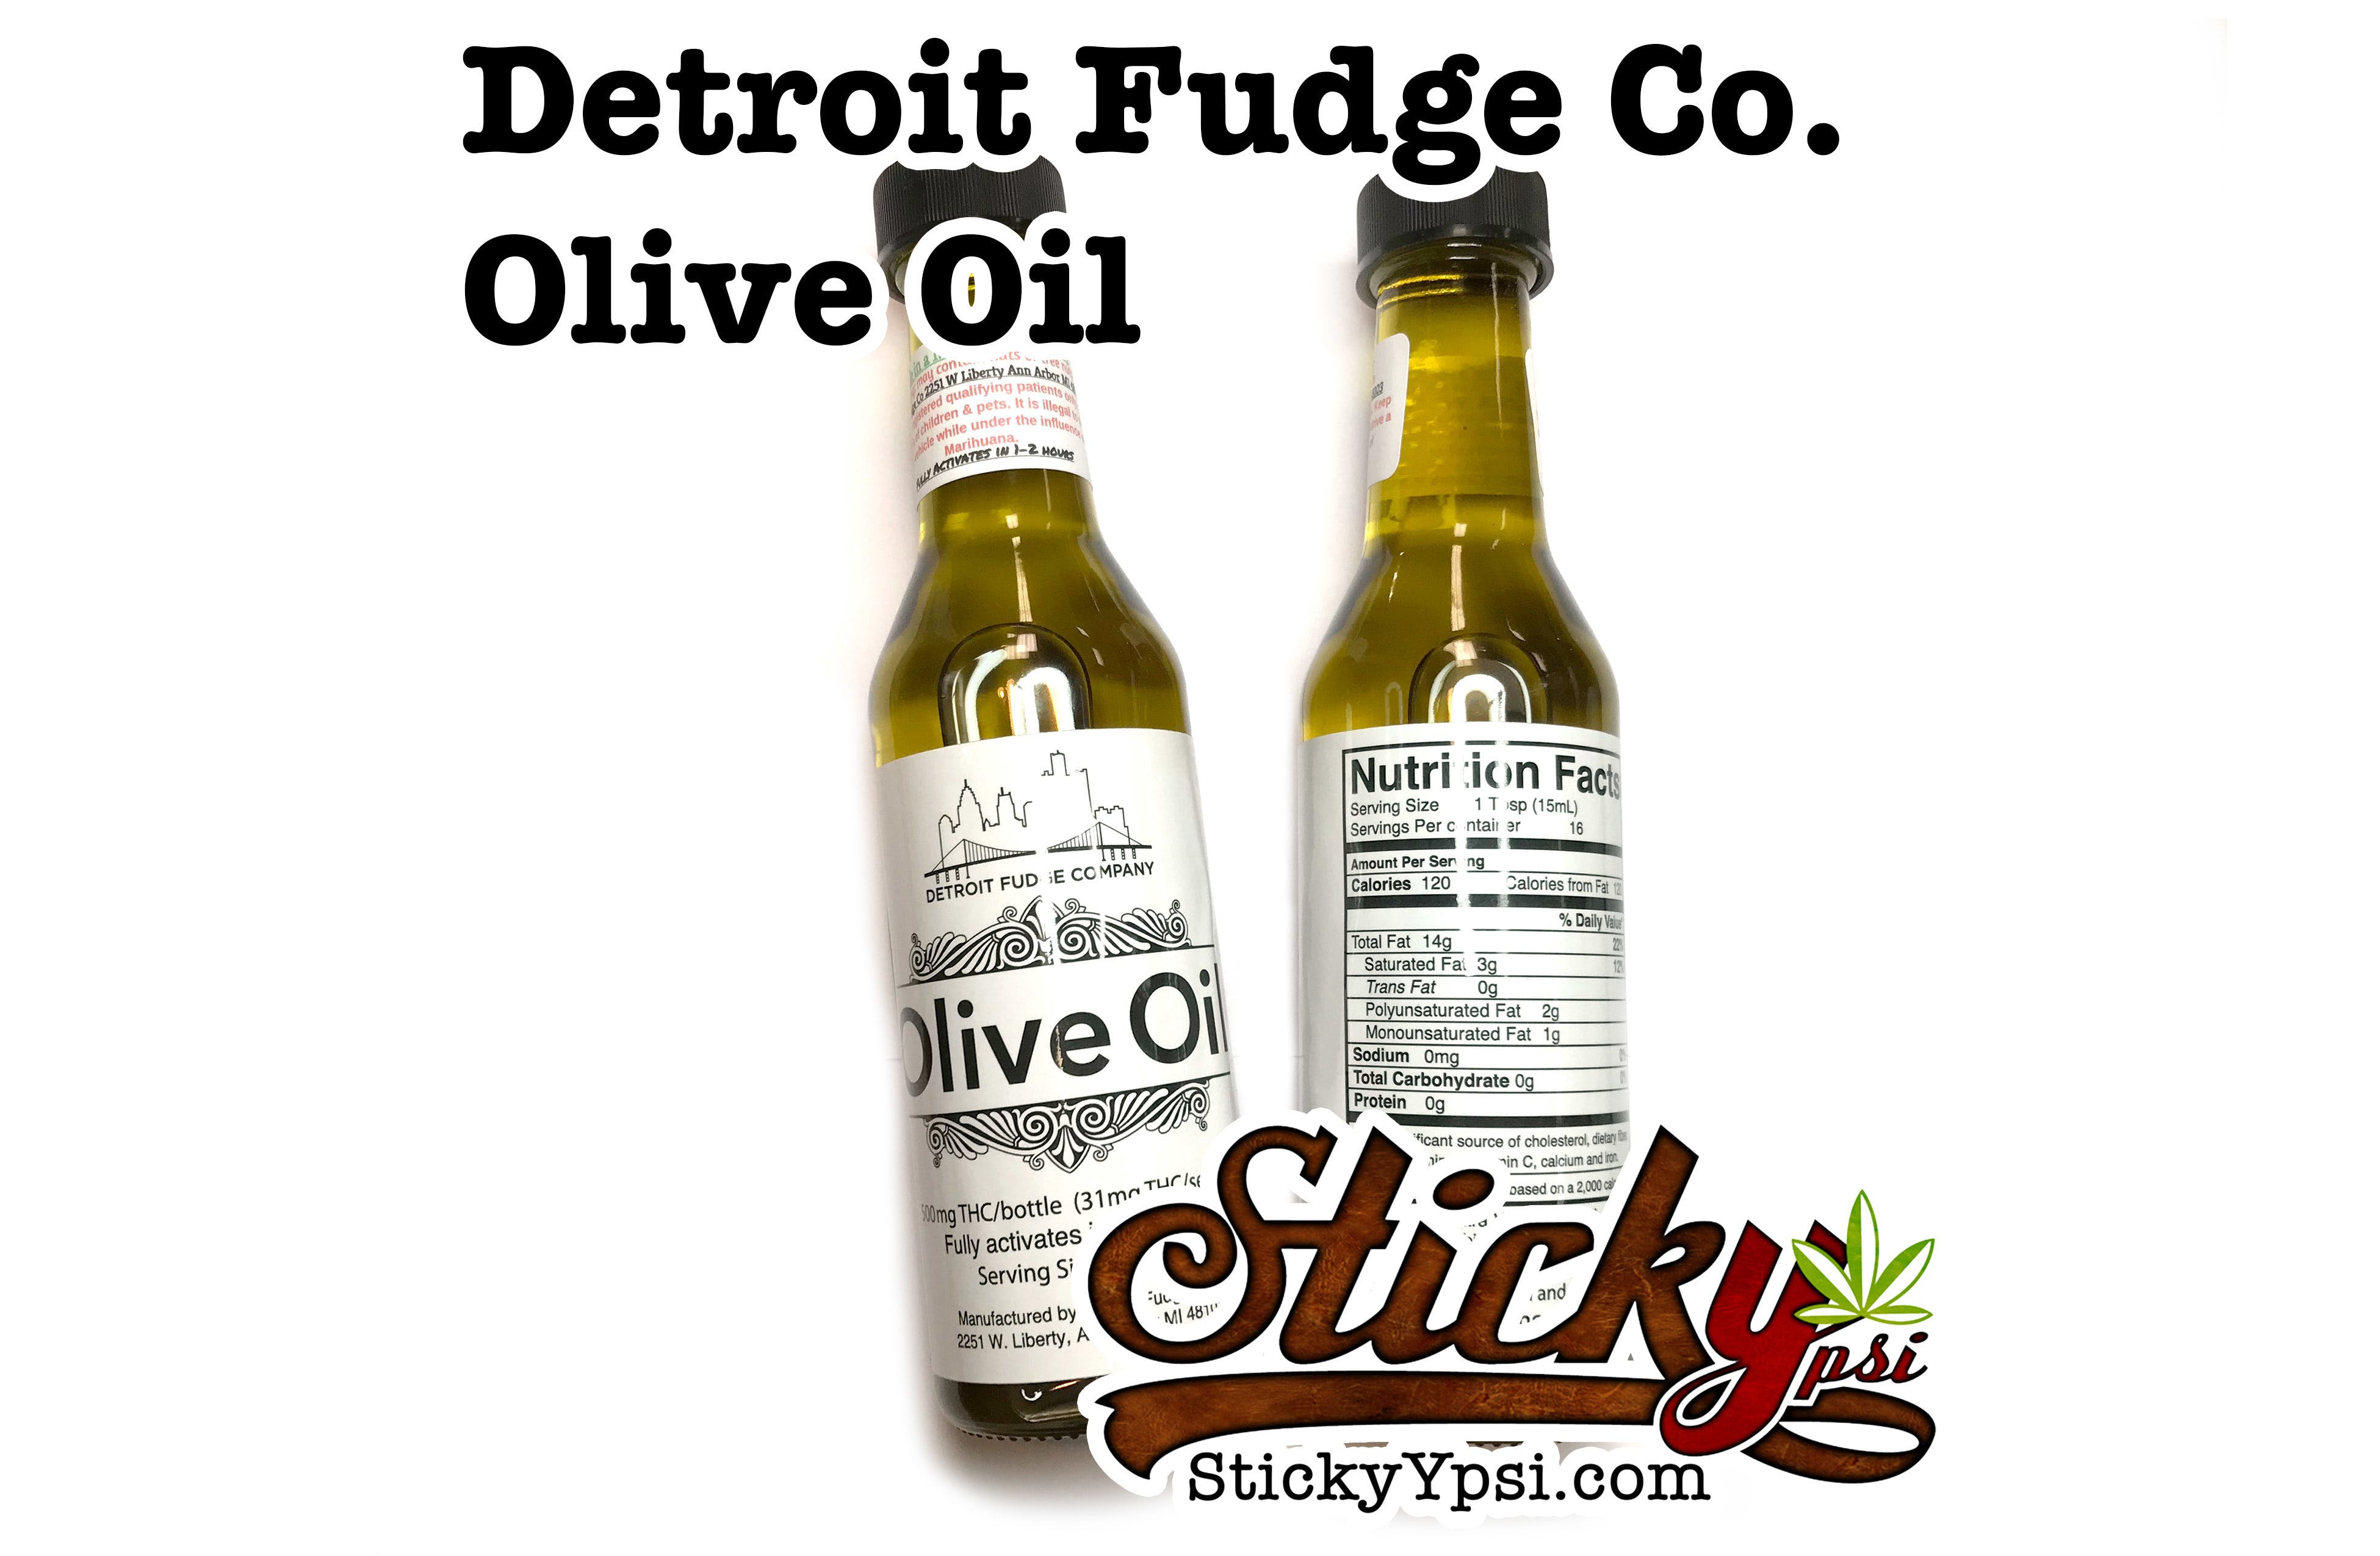 edible-detroit-fudge-co-200mg-thc-olive-oil